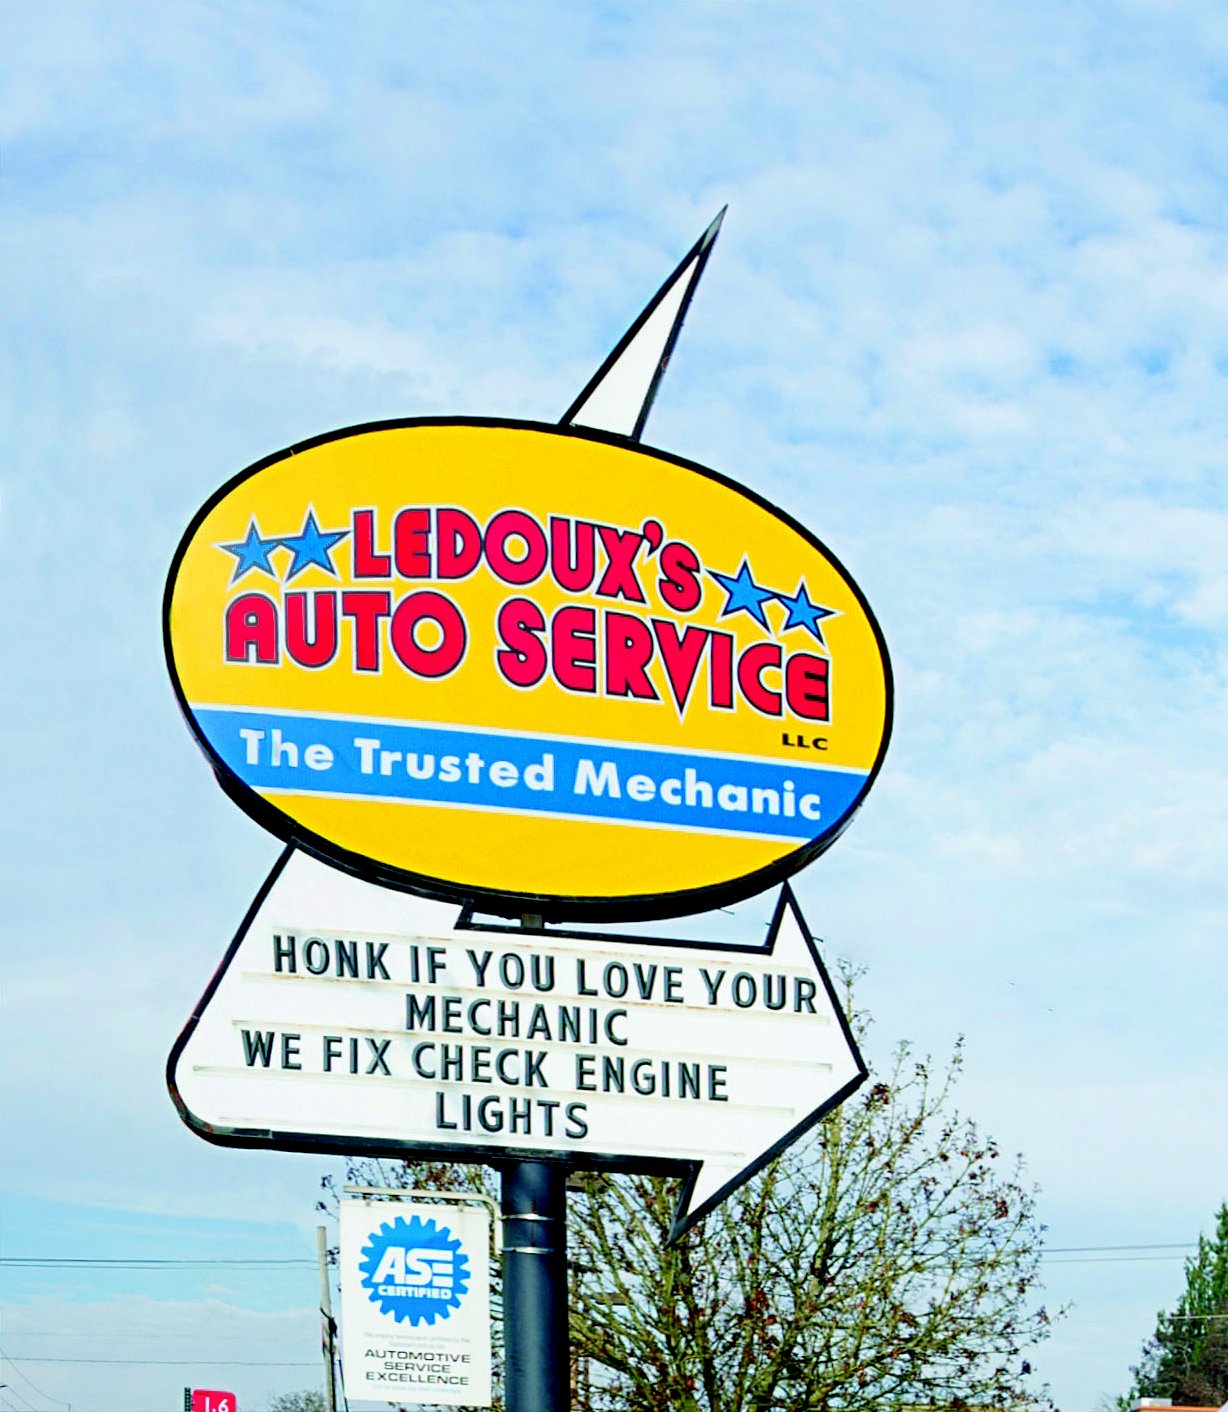 Ledoux's Auto Service & Repair Photo